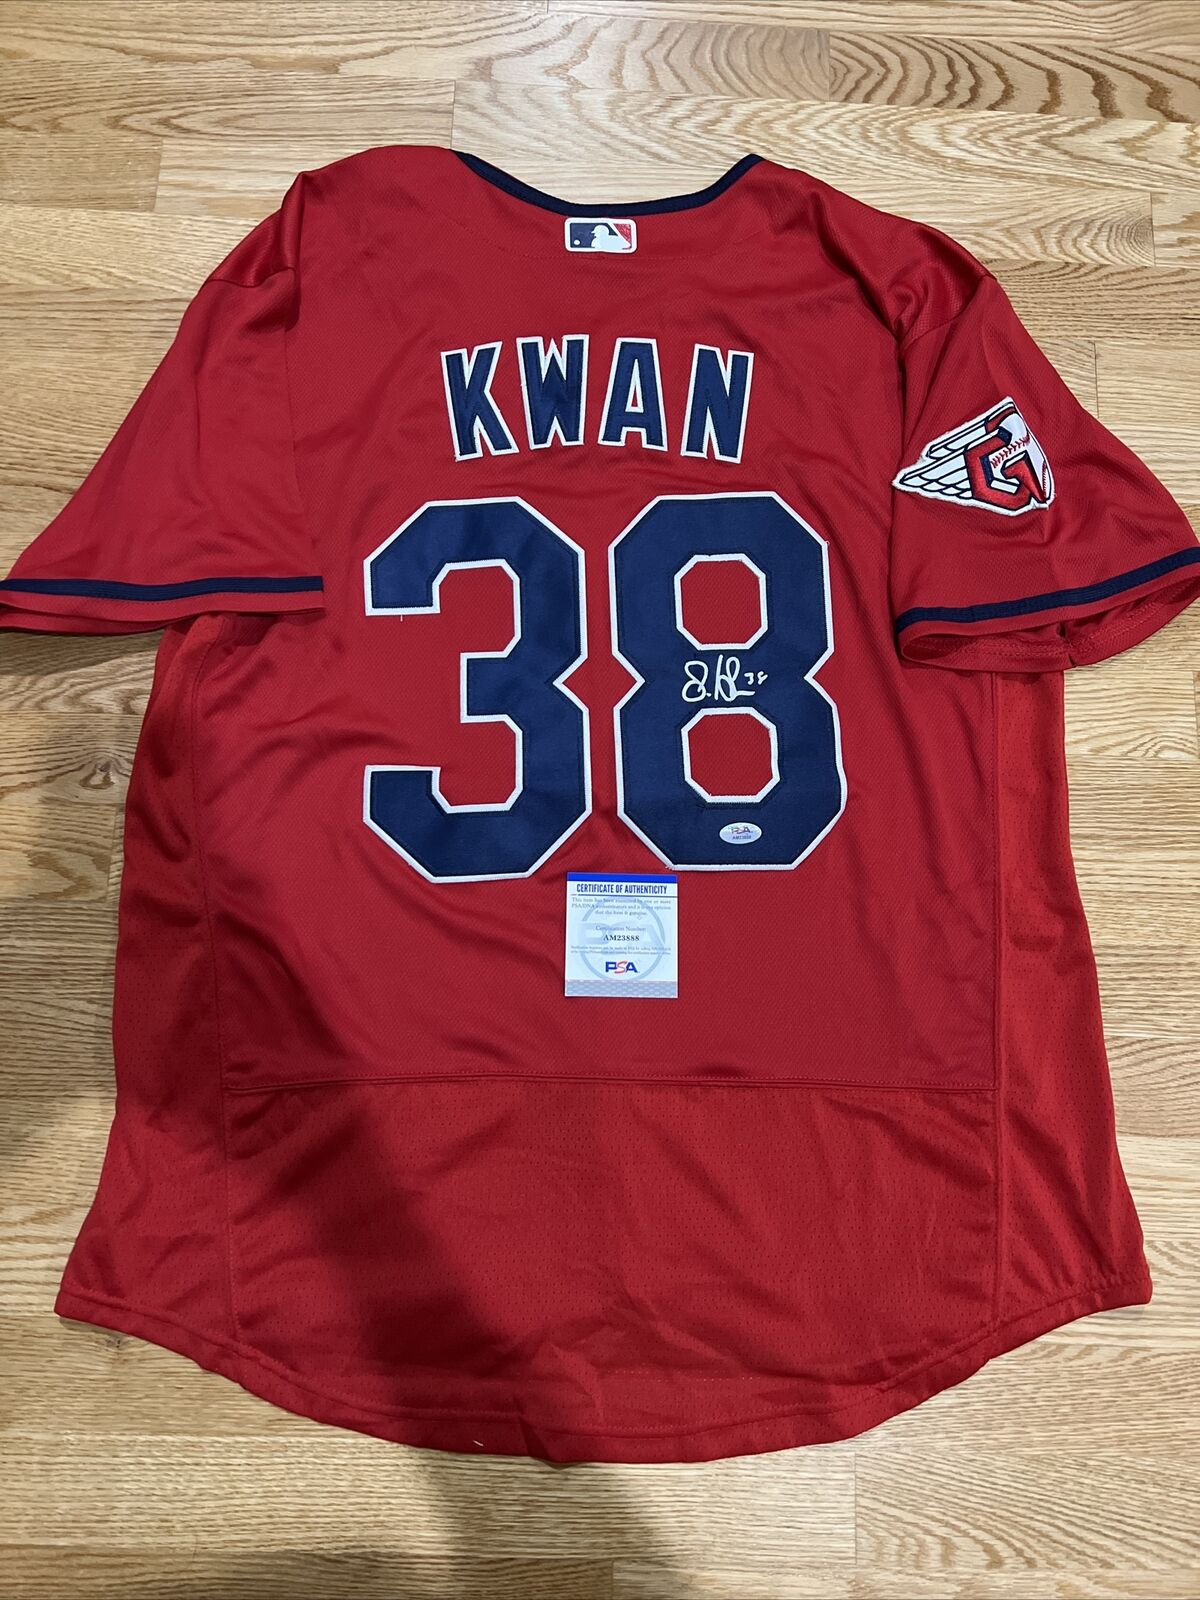 Steven Kwan Signed Baseball & Jersey (Size 44)